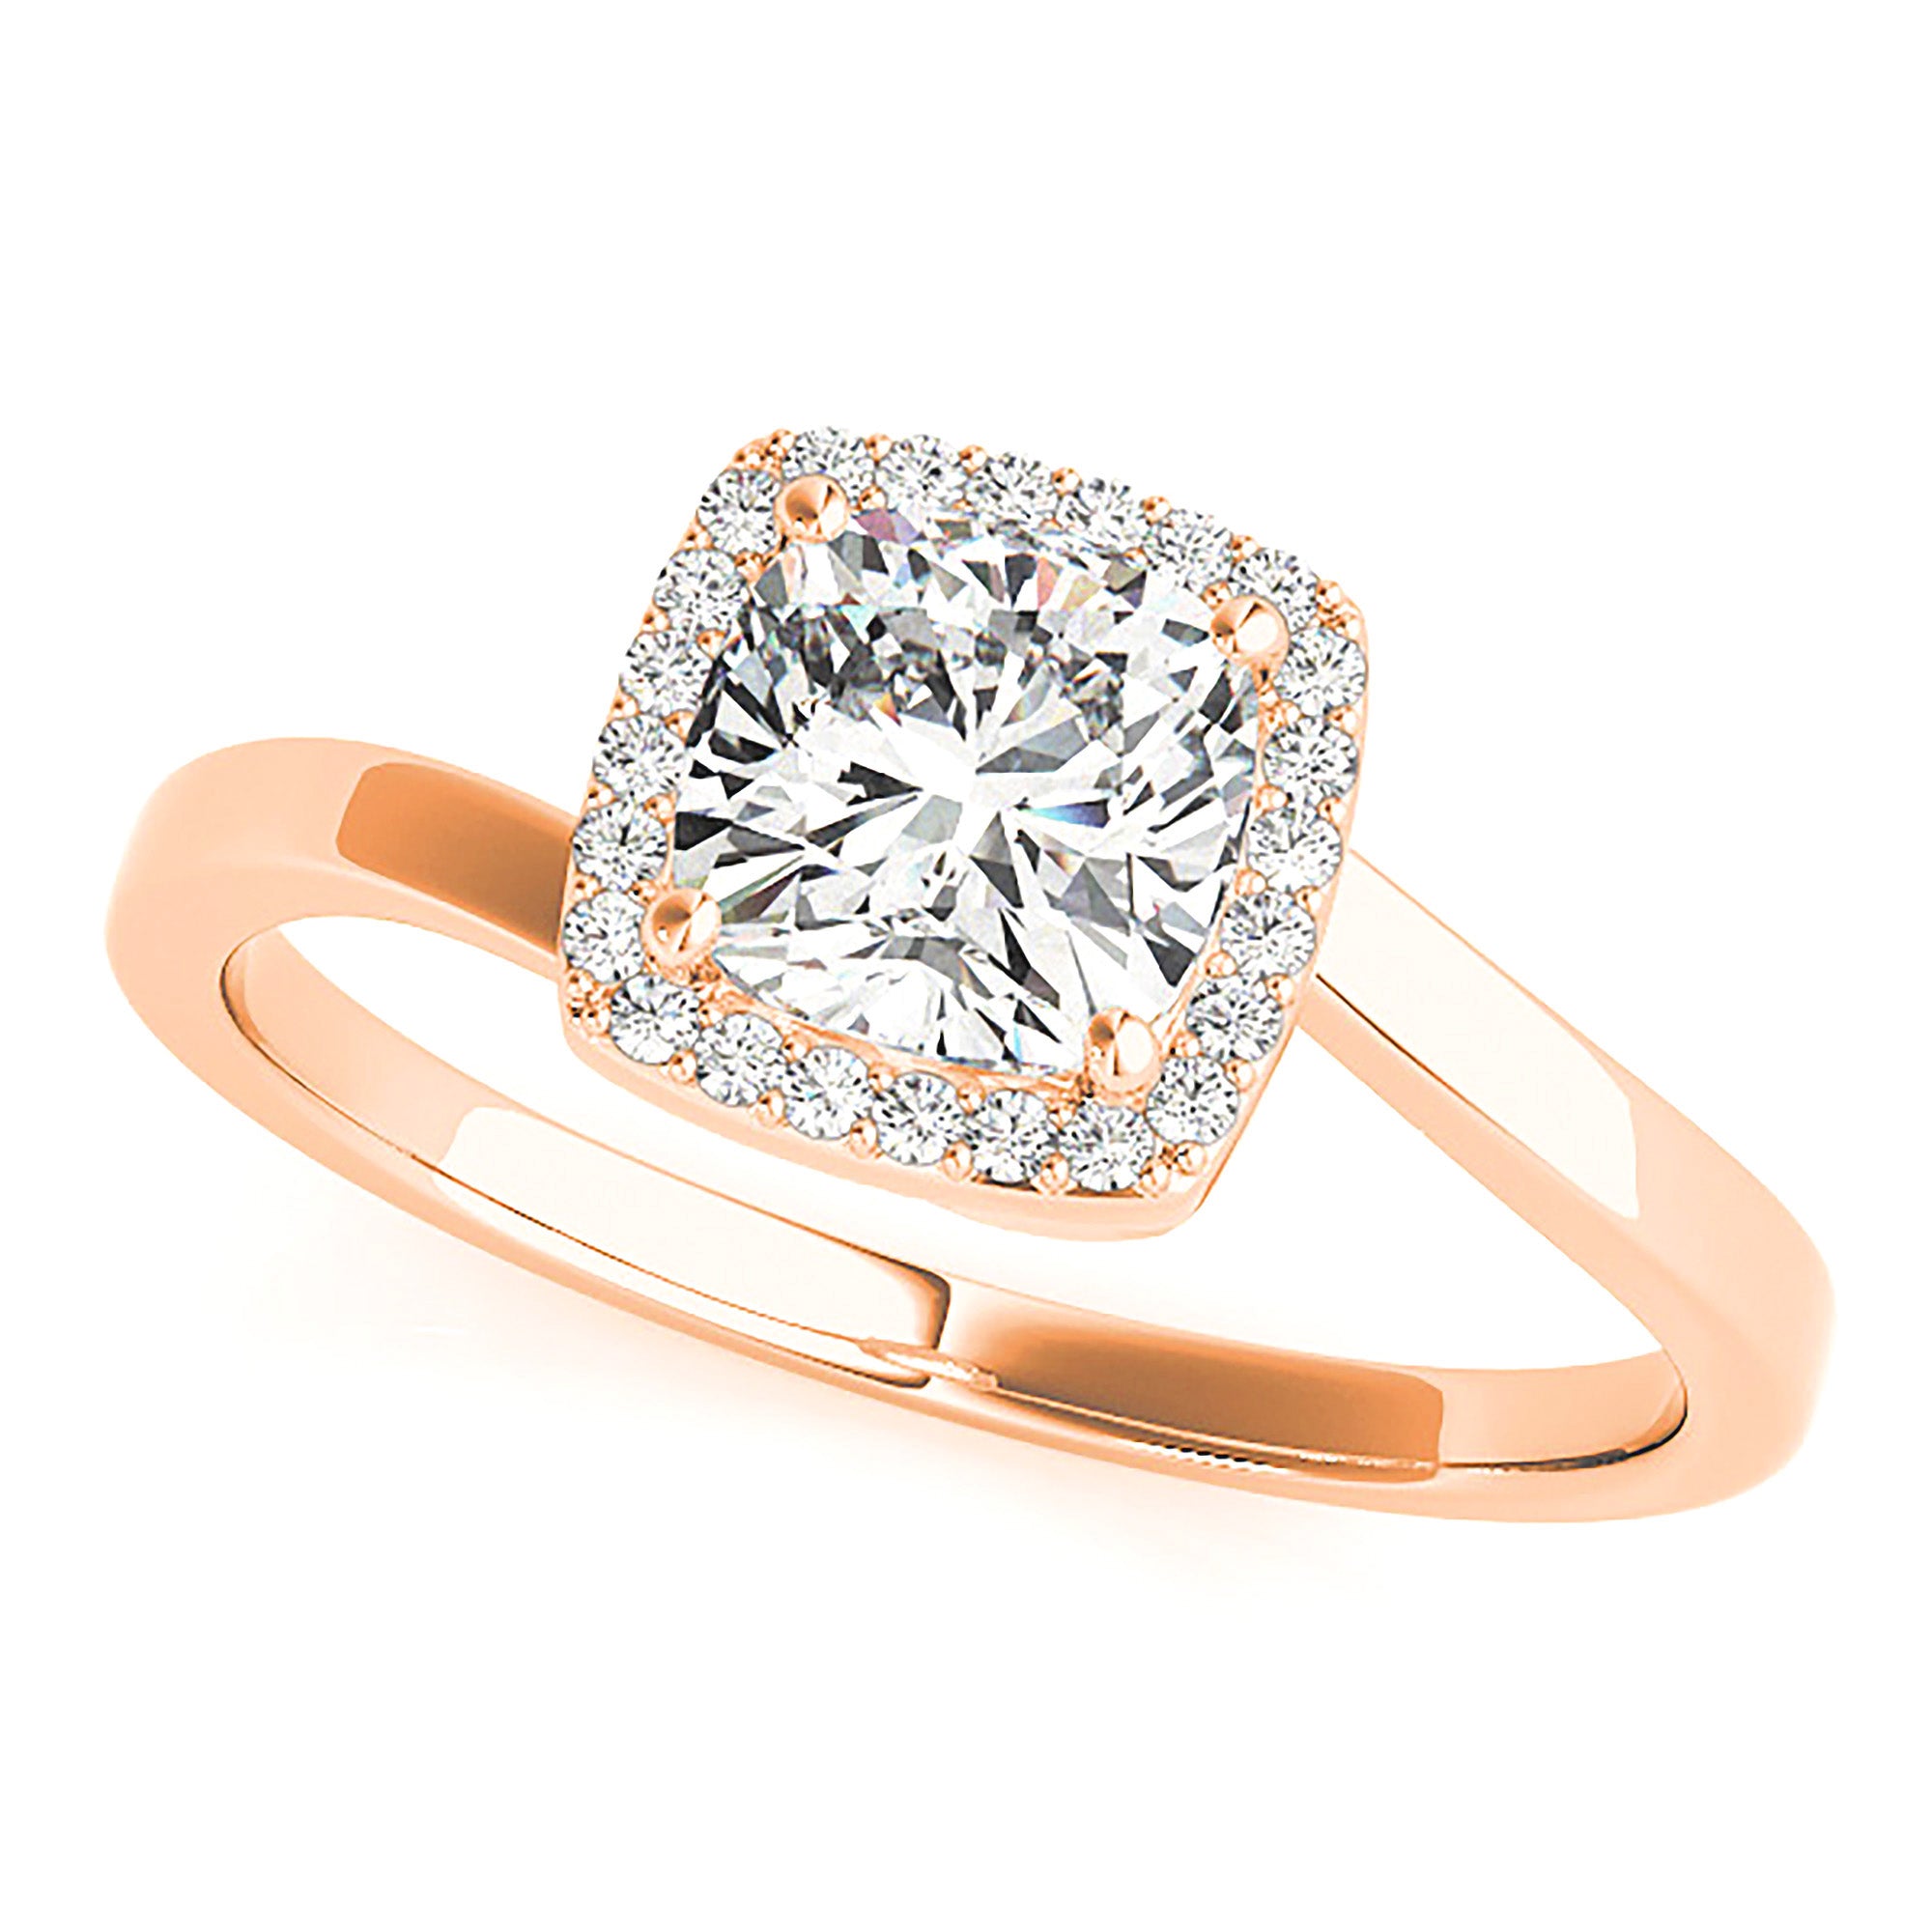 Halo Cushion Cut Diamond Engagement Ring-in 14K/18K White, Yellow, Rose Gold and Platinum - Christmas Jewelry Gift -VIRABYANI